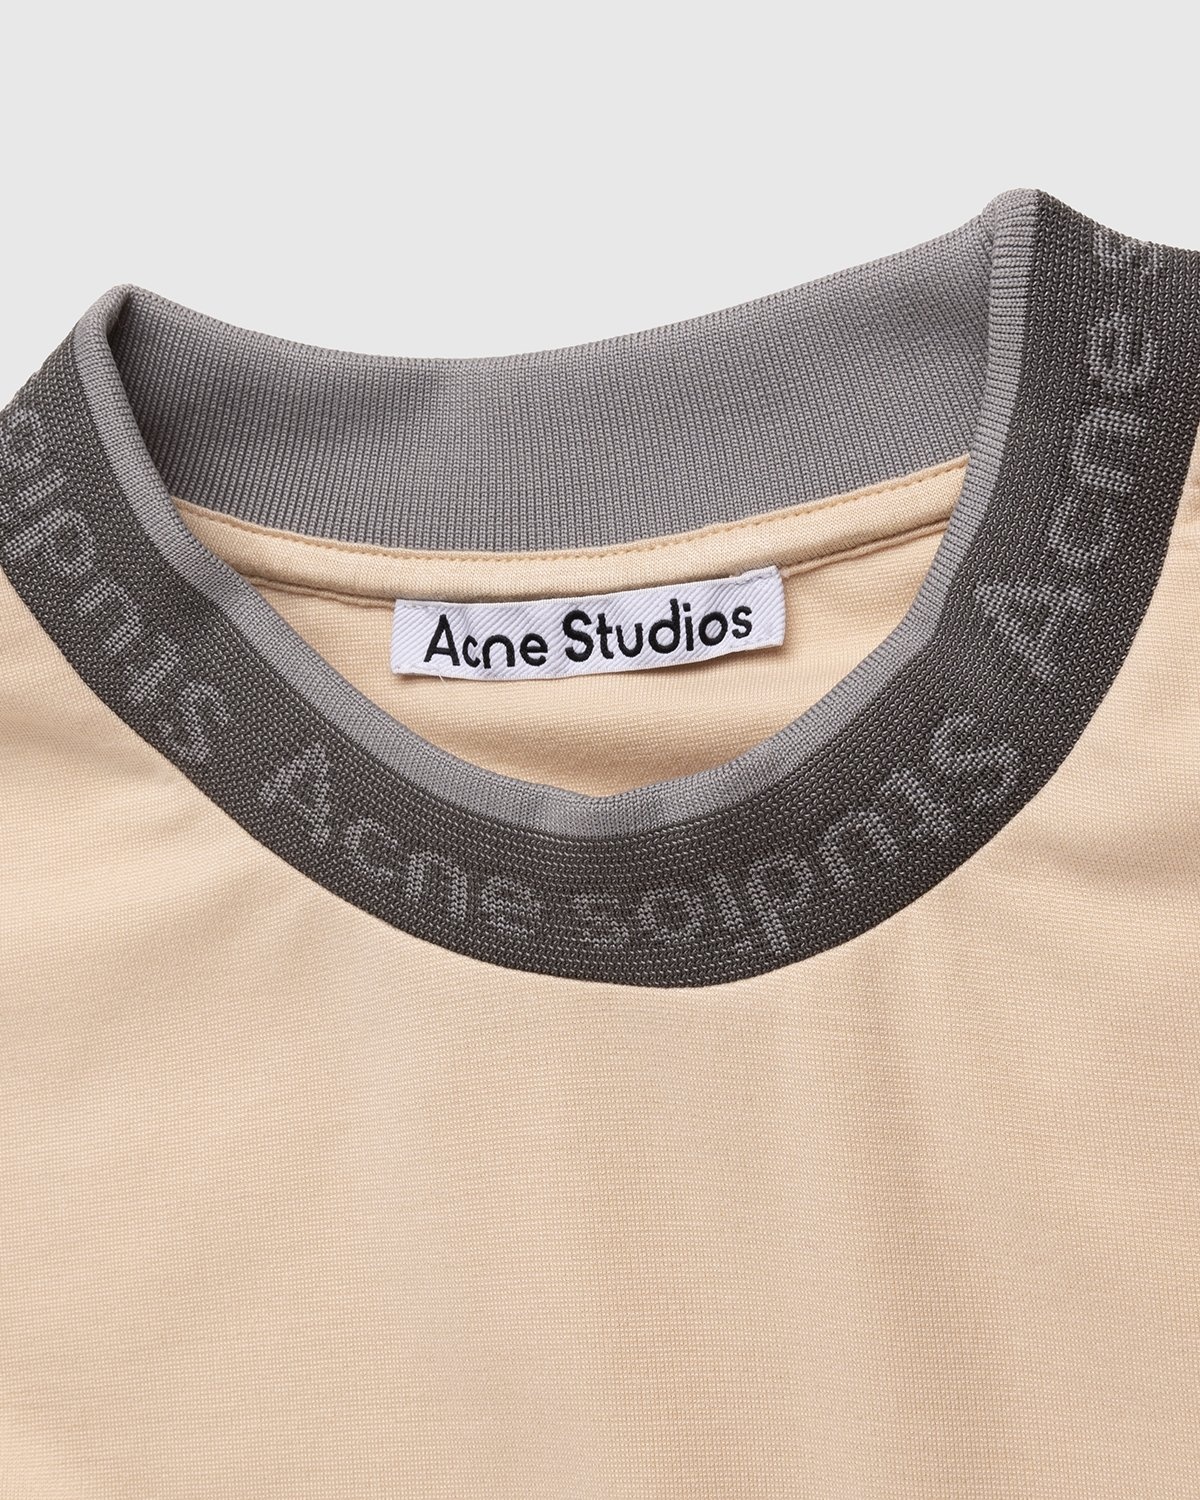 Acne Studios – Logo Collar T-Shirt Cream Beige - T-Shirts - Beige - Image 4